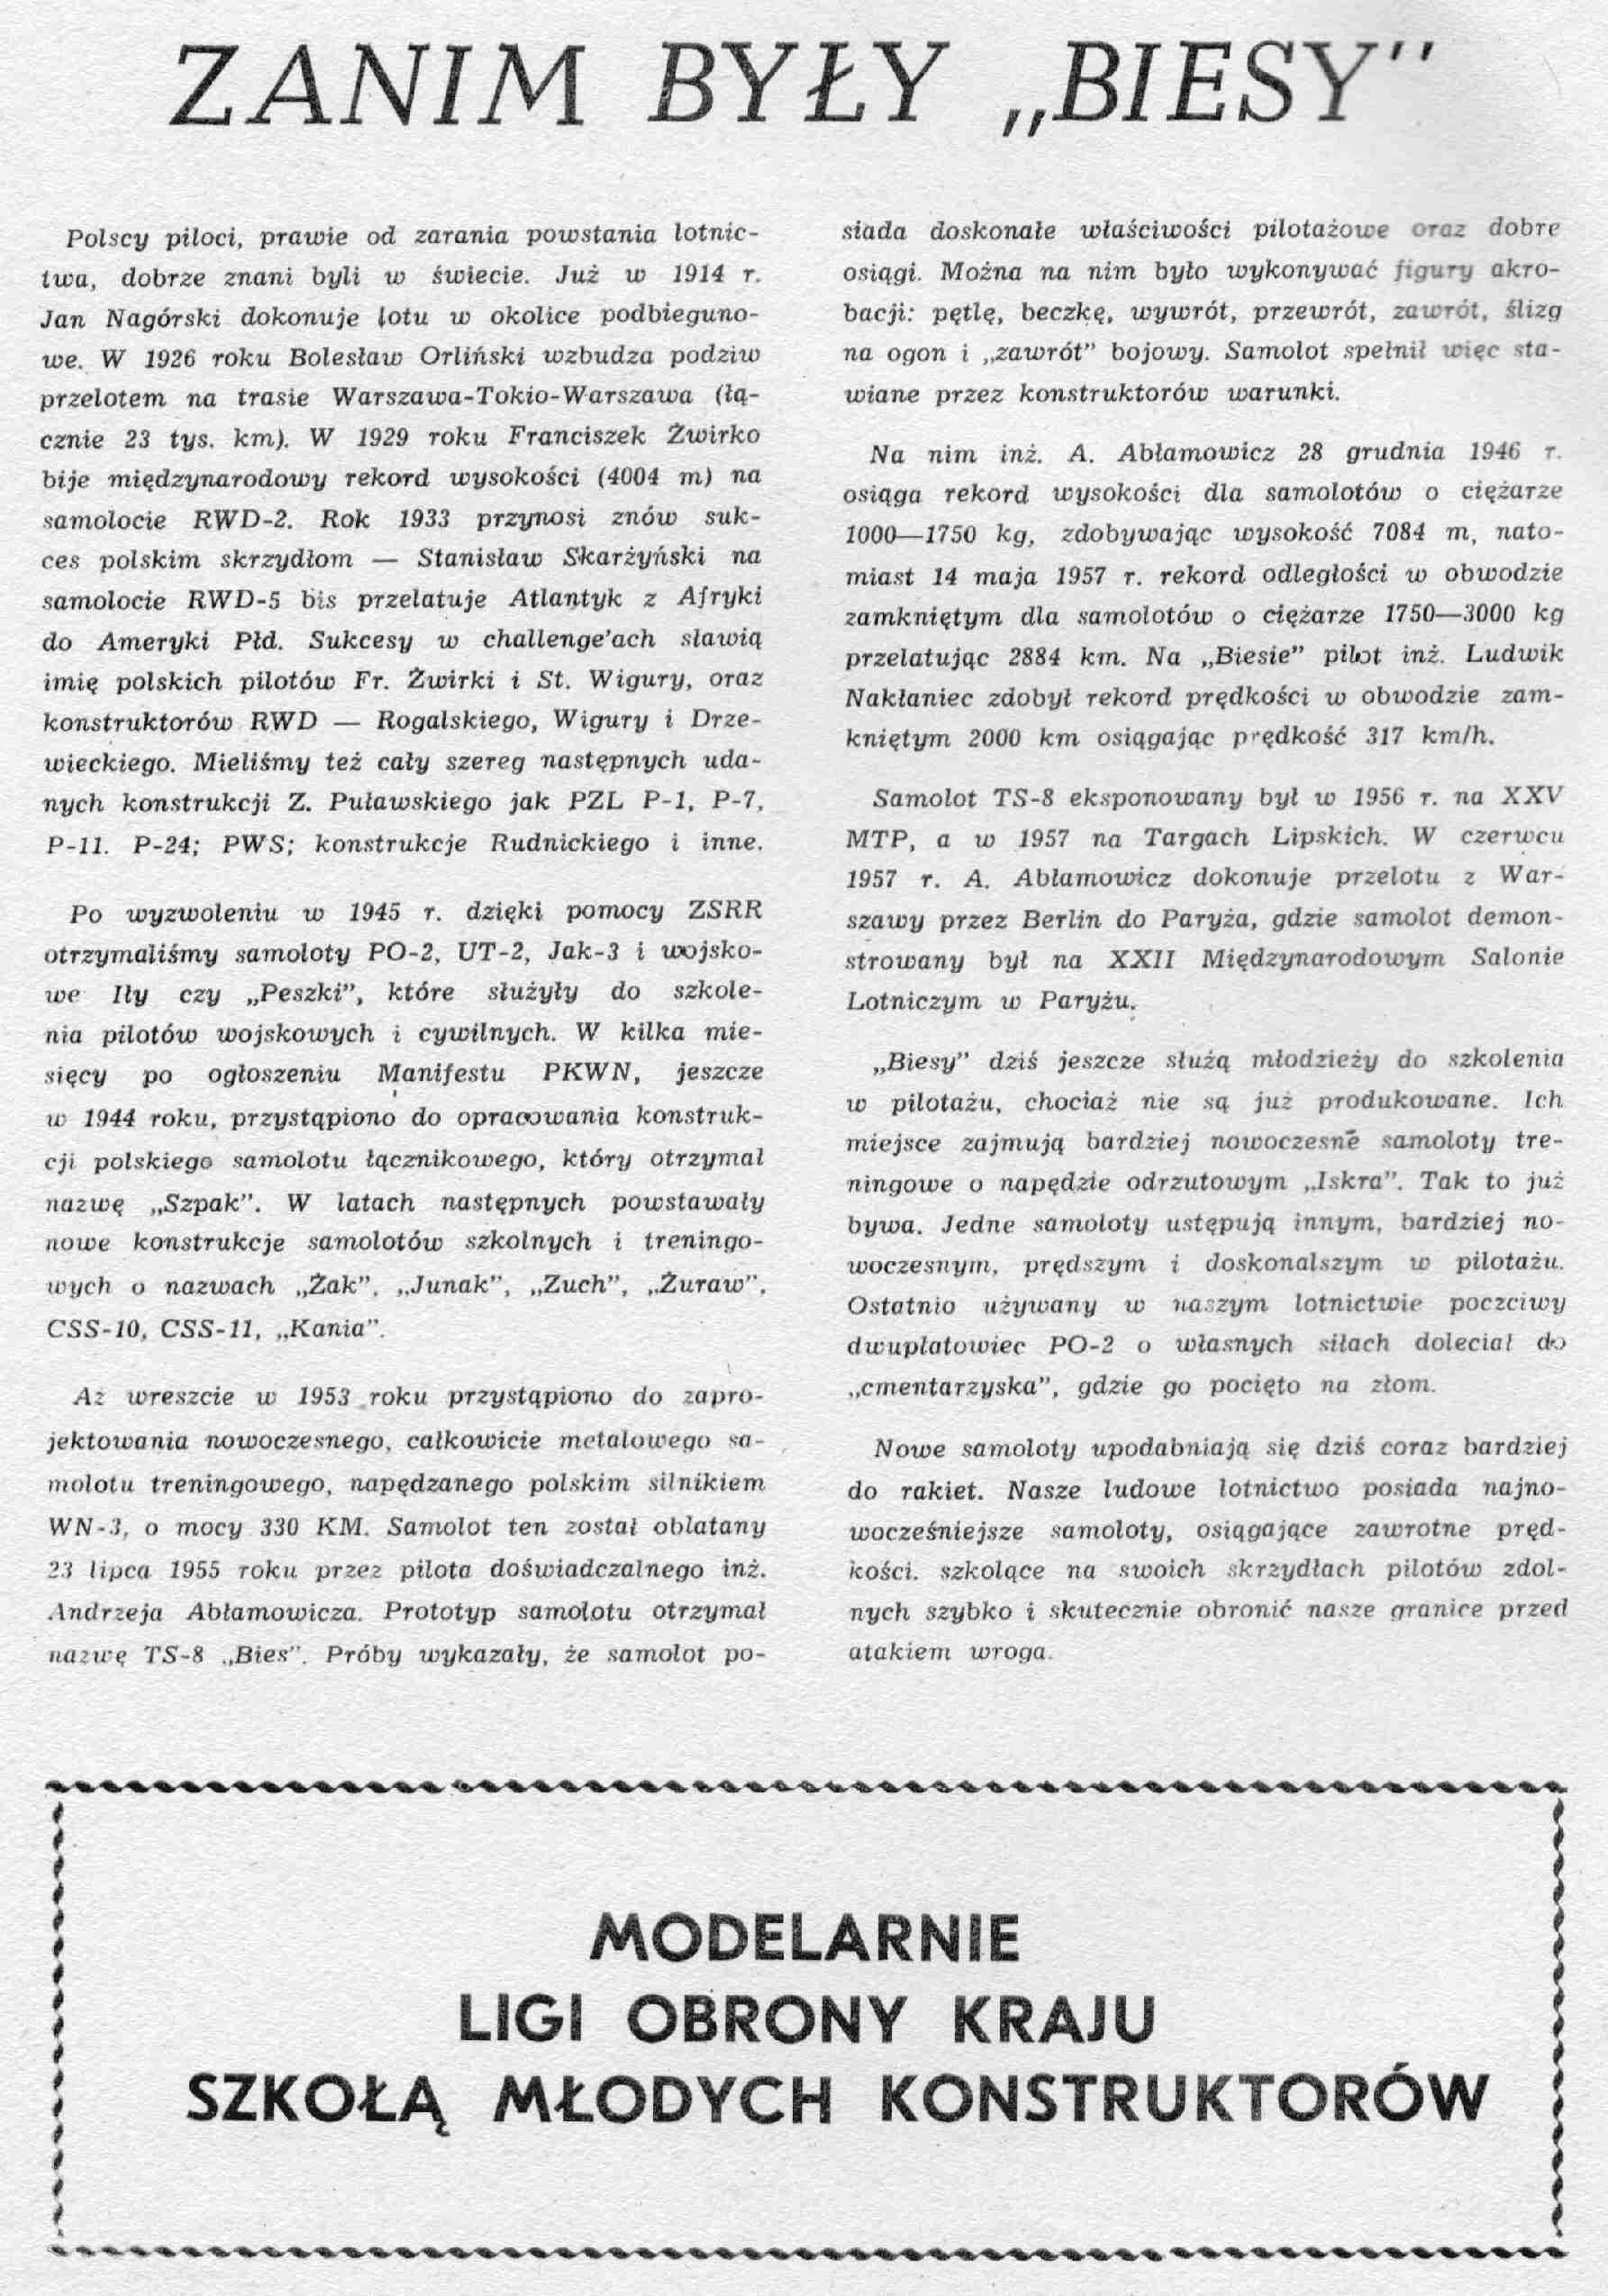 "Maly Modelarz" 4, 1969 2 с.